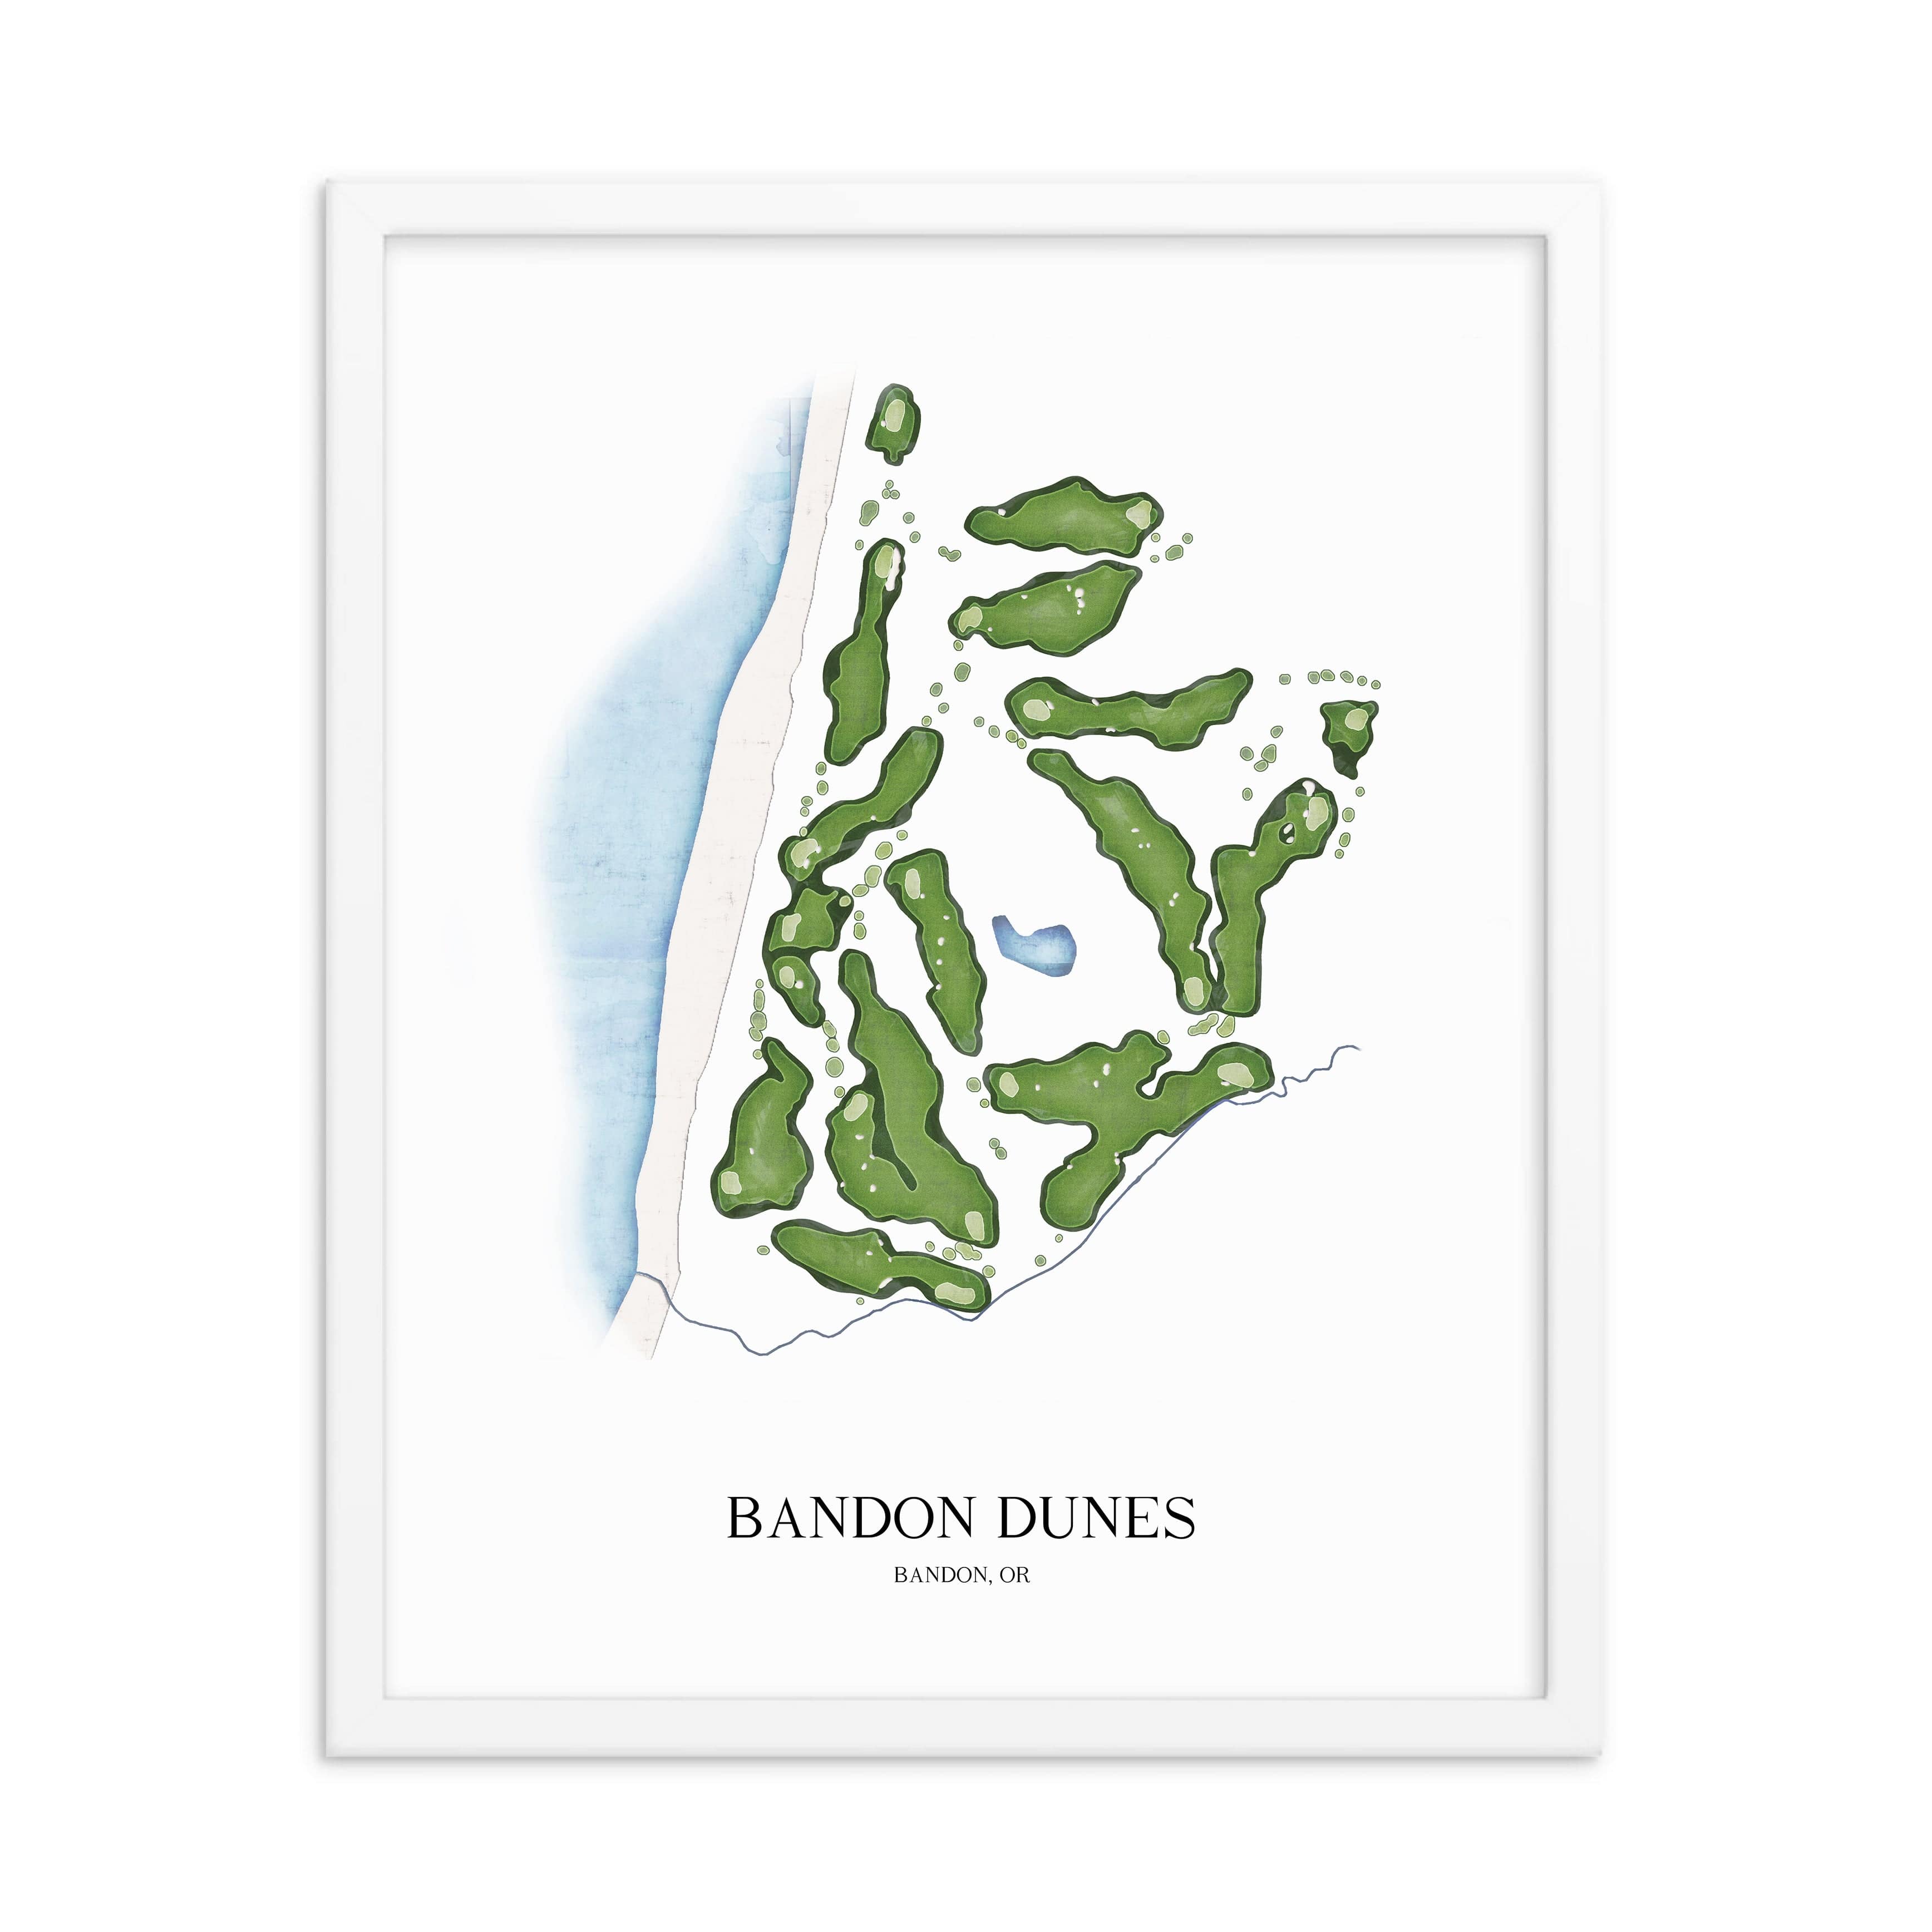 The 19th Hole Golf Shop - Golf Course Prints -  8" x 10" / White Bandon Dunes Golf Course Map